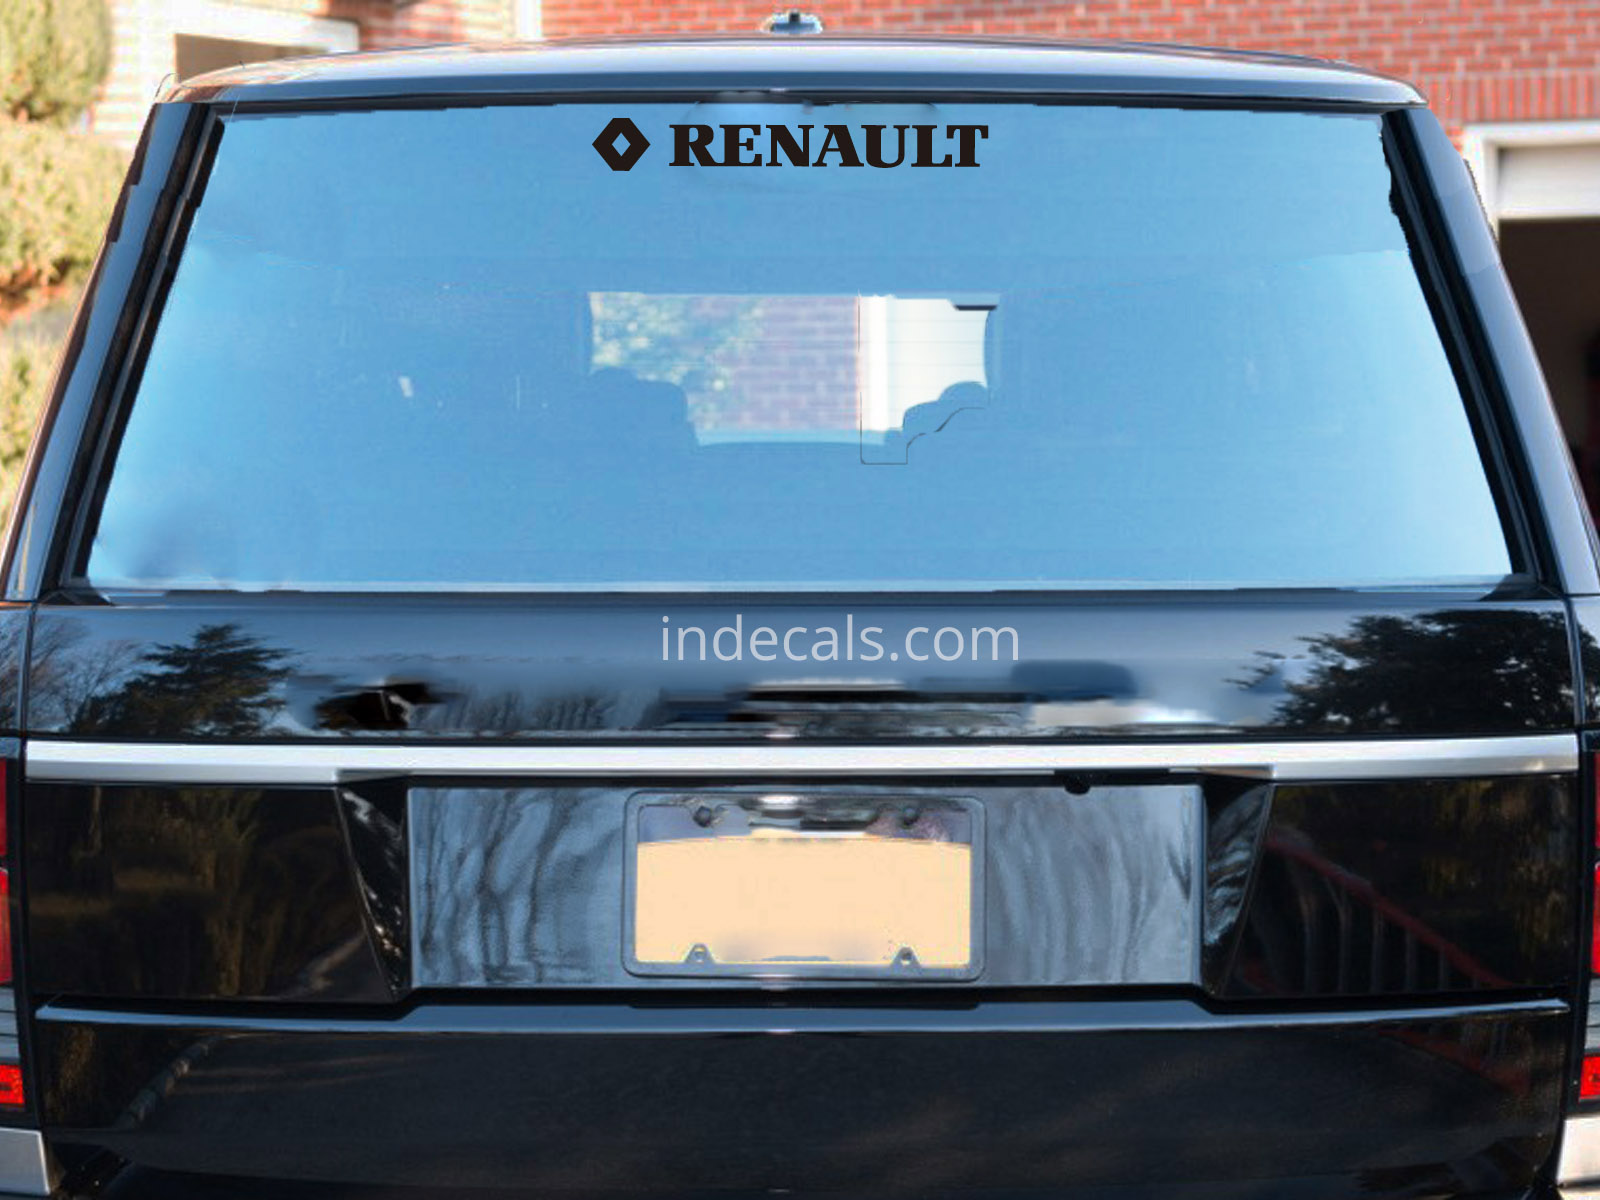 1 x Renault Sticker for Windshield or Back Window - Black